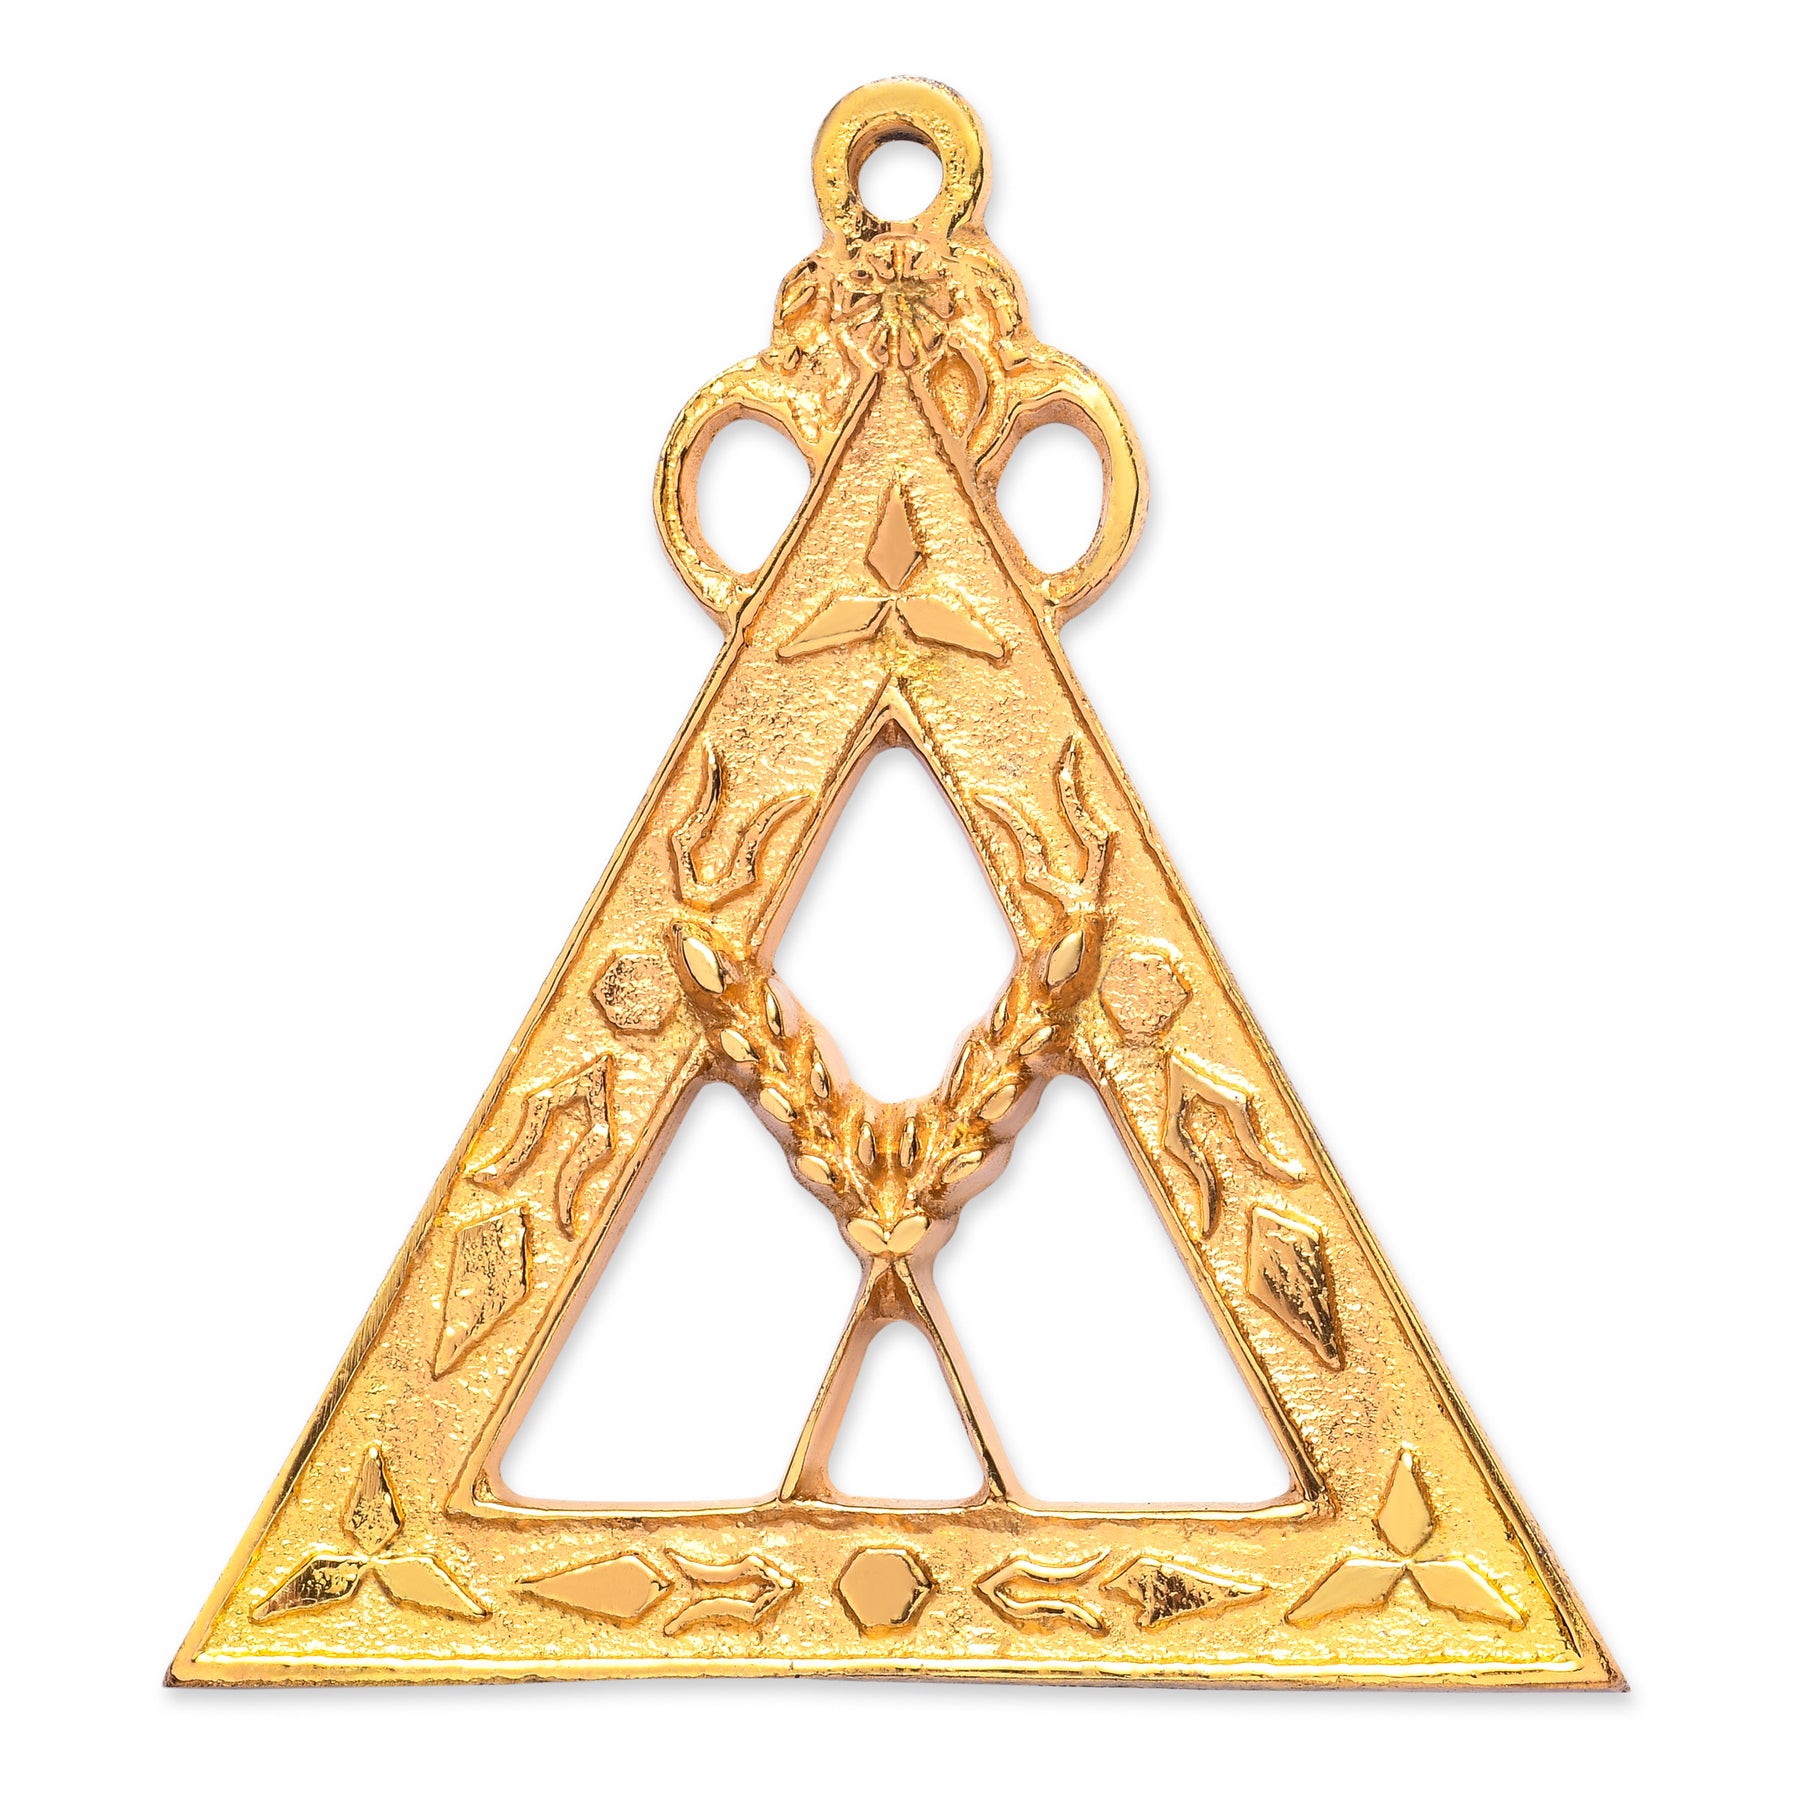 Secretary Royal Arch Chapter Officer Collar Jewel - Gold Plated - Bricks Masons